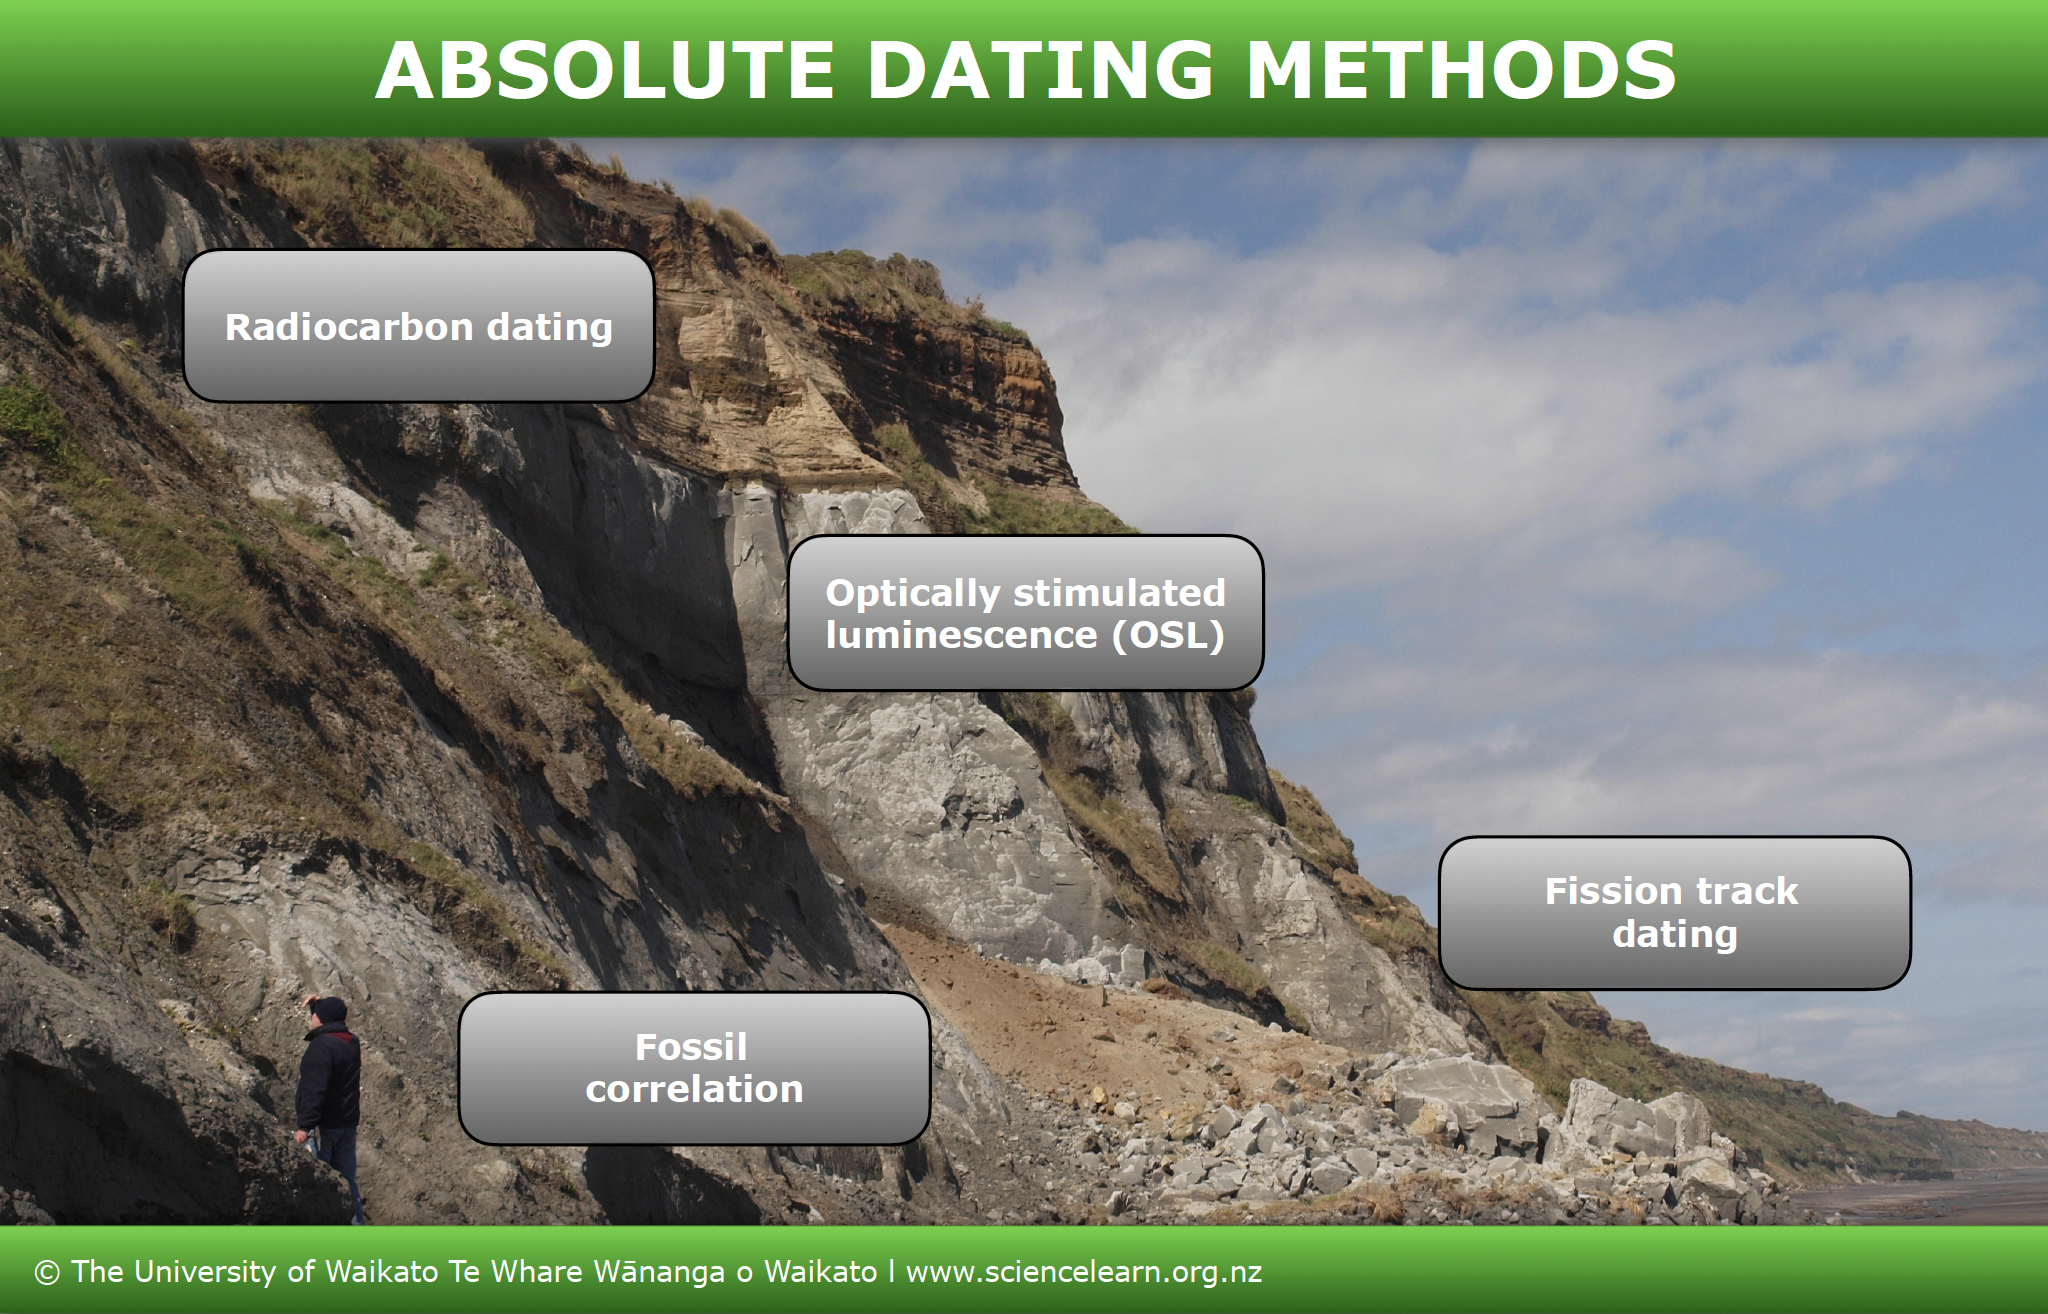 Radiocarbon dating